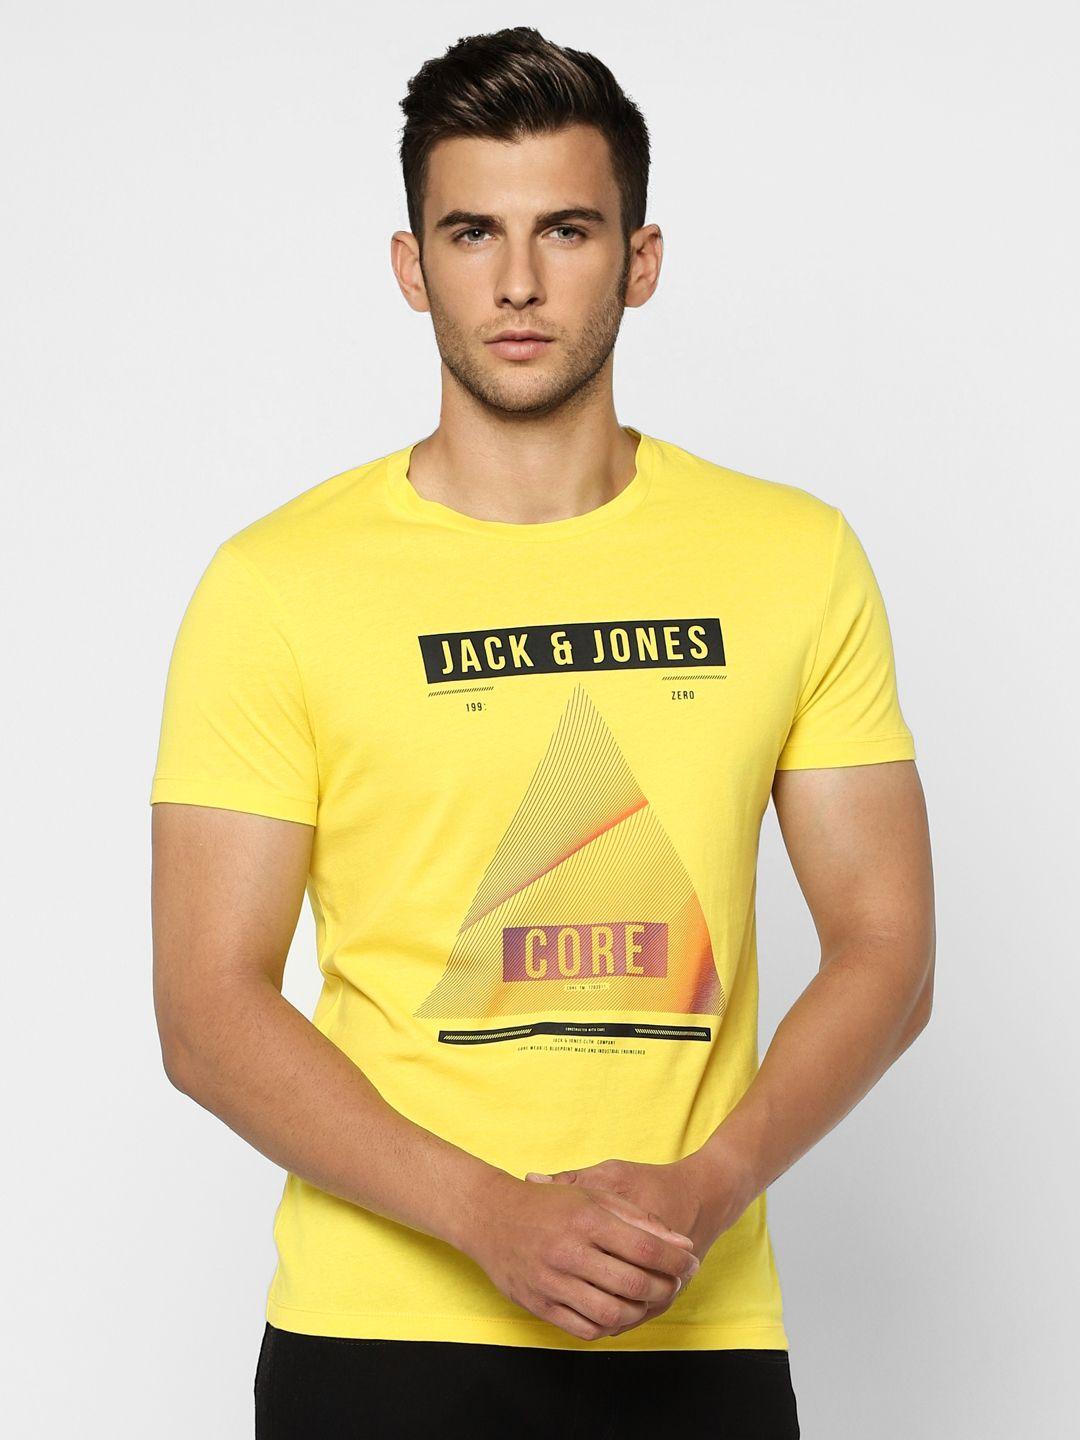 jack & jones men yellow typography printed slim fit t-shirt